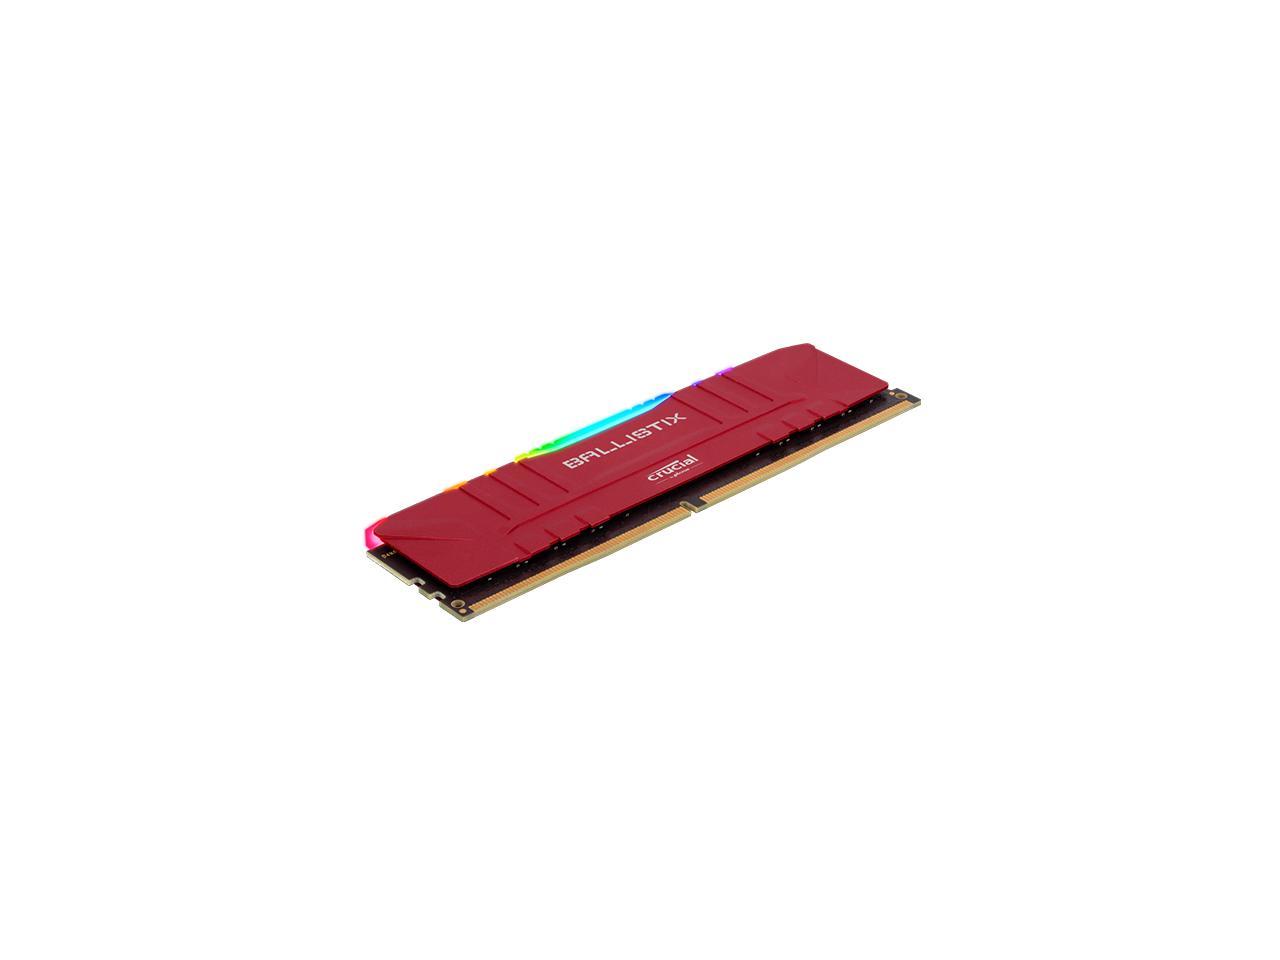 Crucial Ballistix RGB 32GB (2 x 16GB) 288-Pin DDR4 SDRAM DDR4 3200 (PC4 25600) Desktop Memory Model BL2K16G32C16U4RL